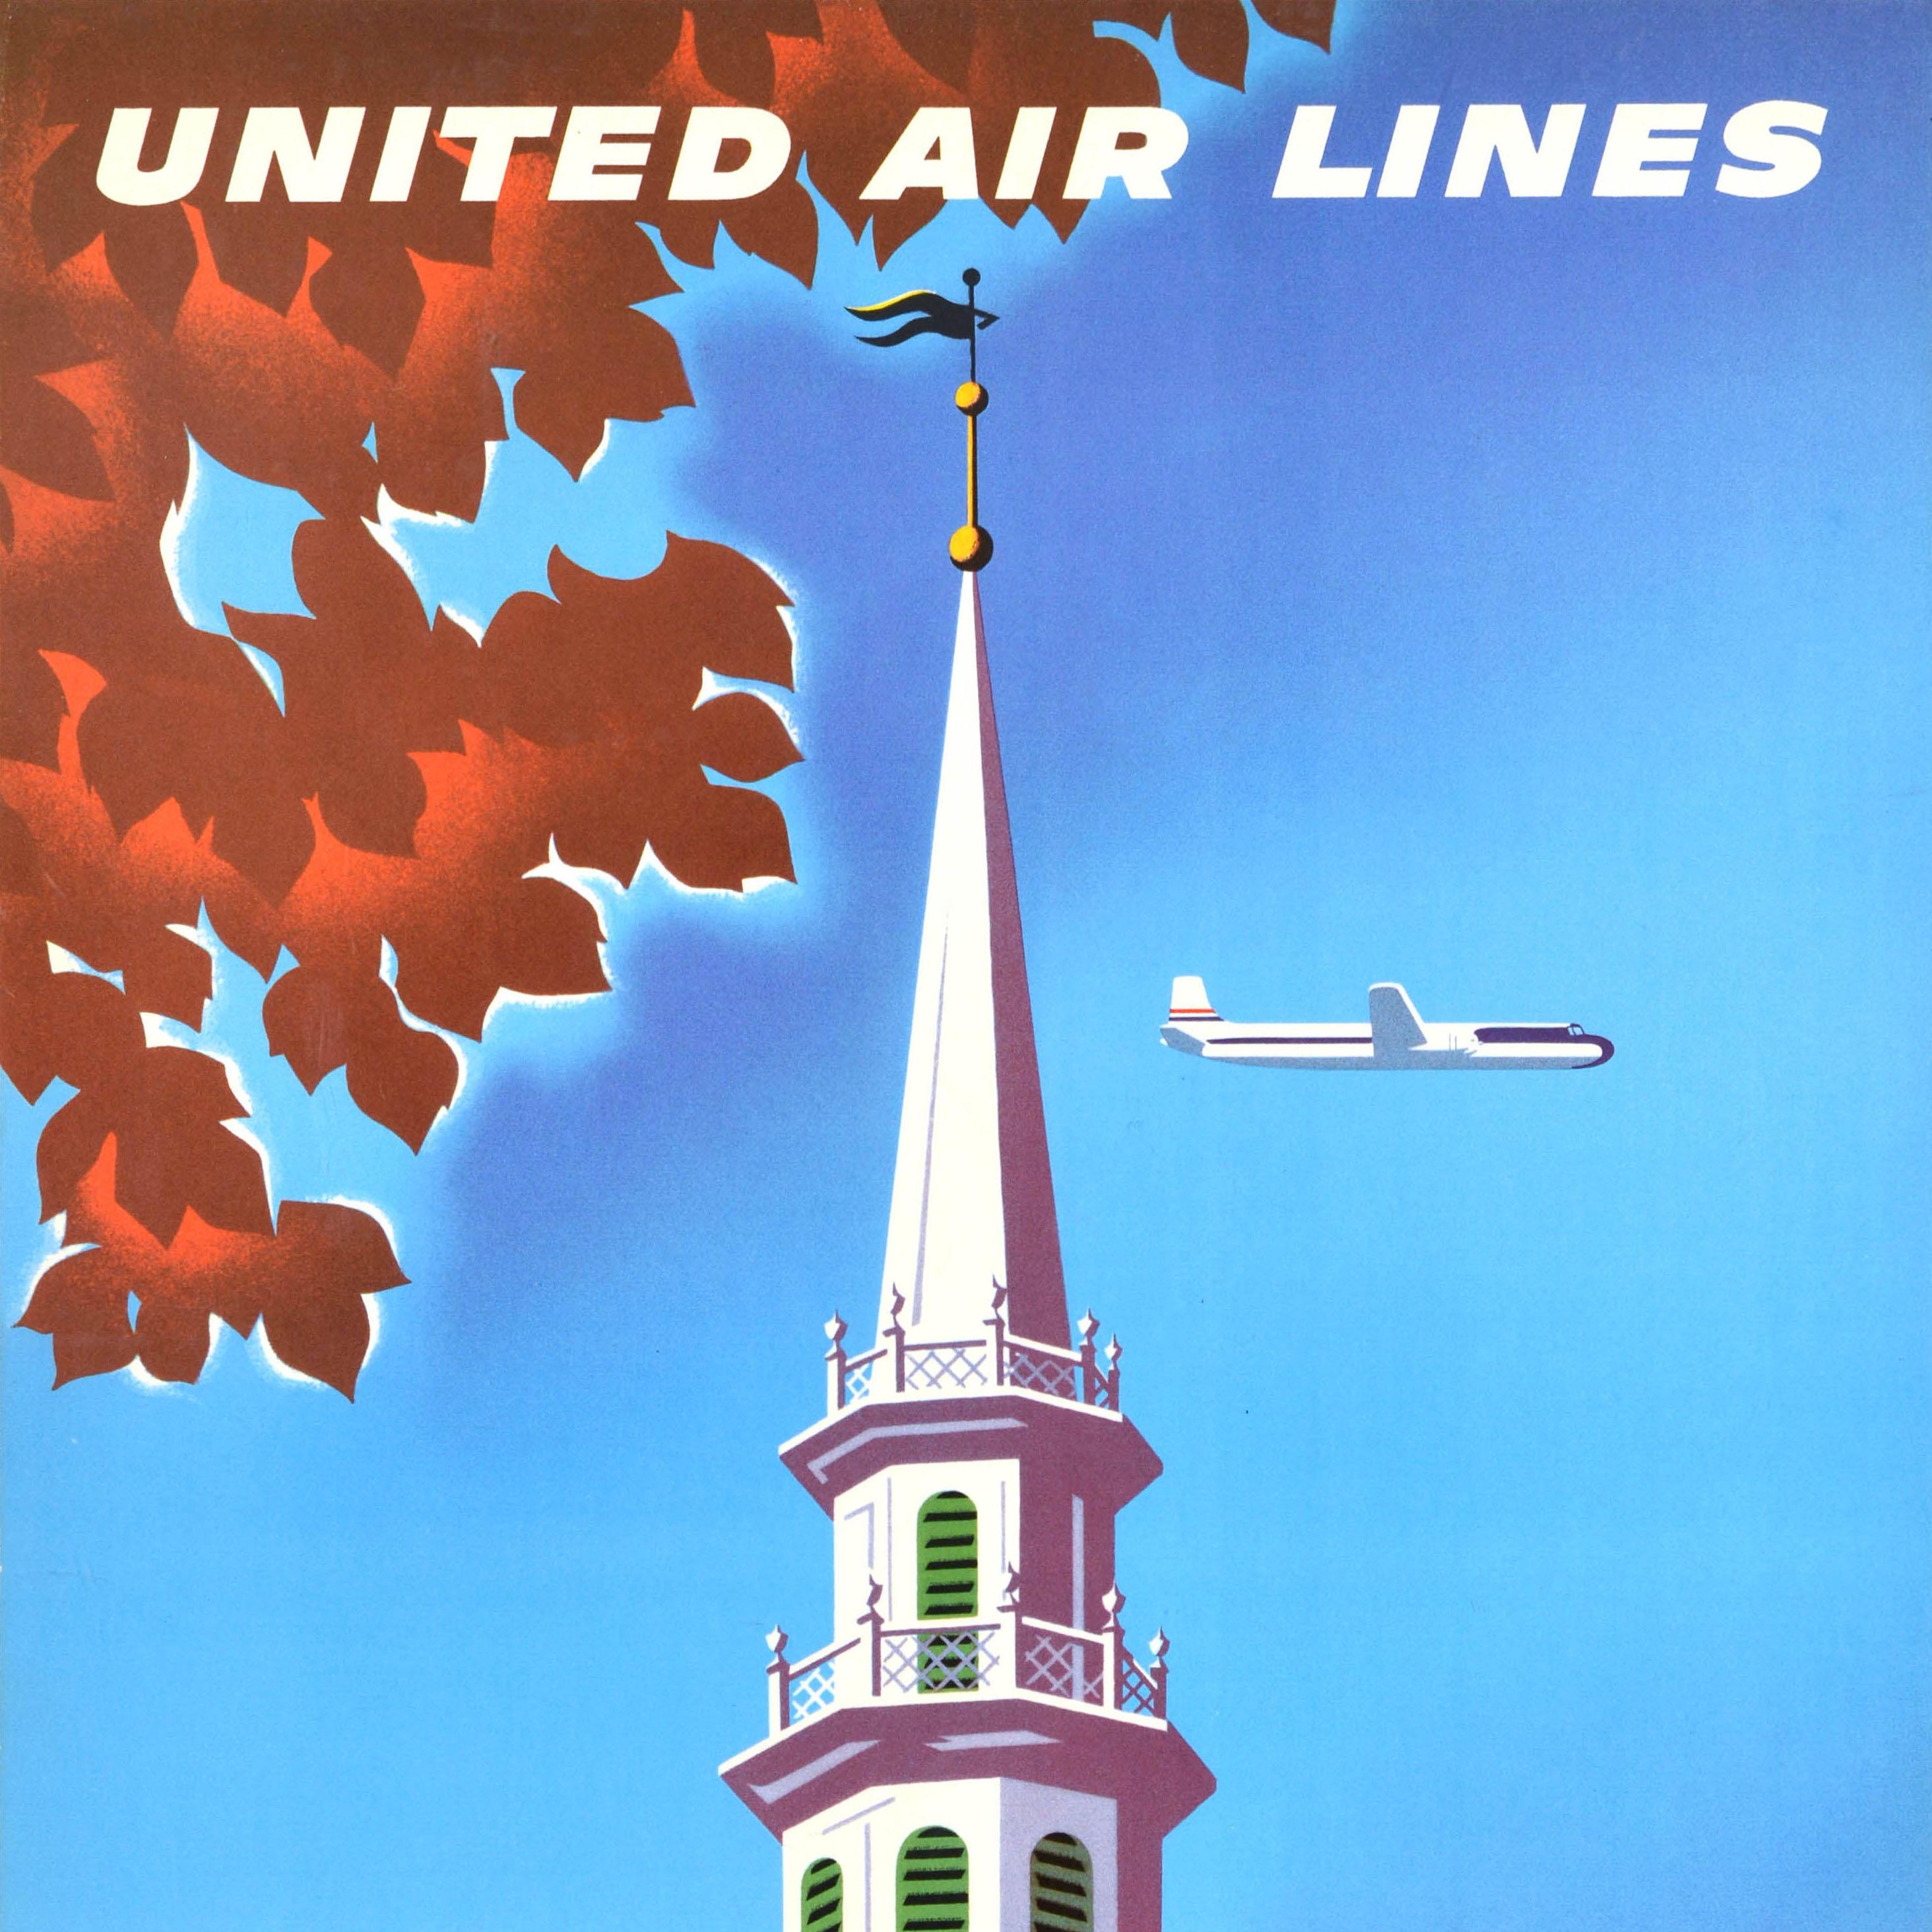 Original Vintage Travel Advertising Poster United Air Lines New England Binder - Print by Joseph Binder